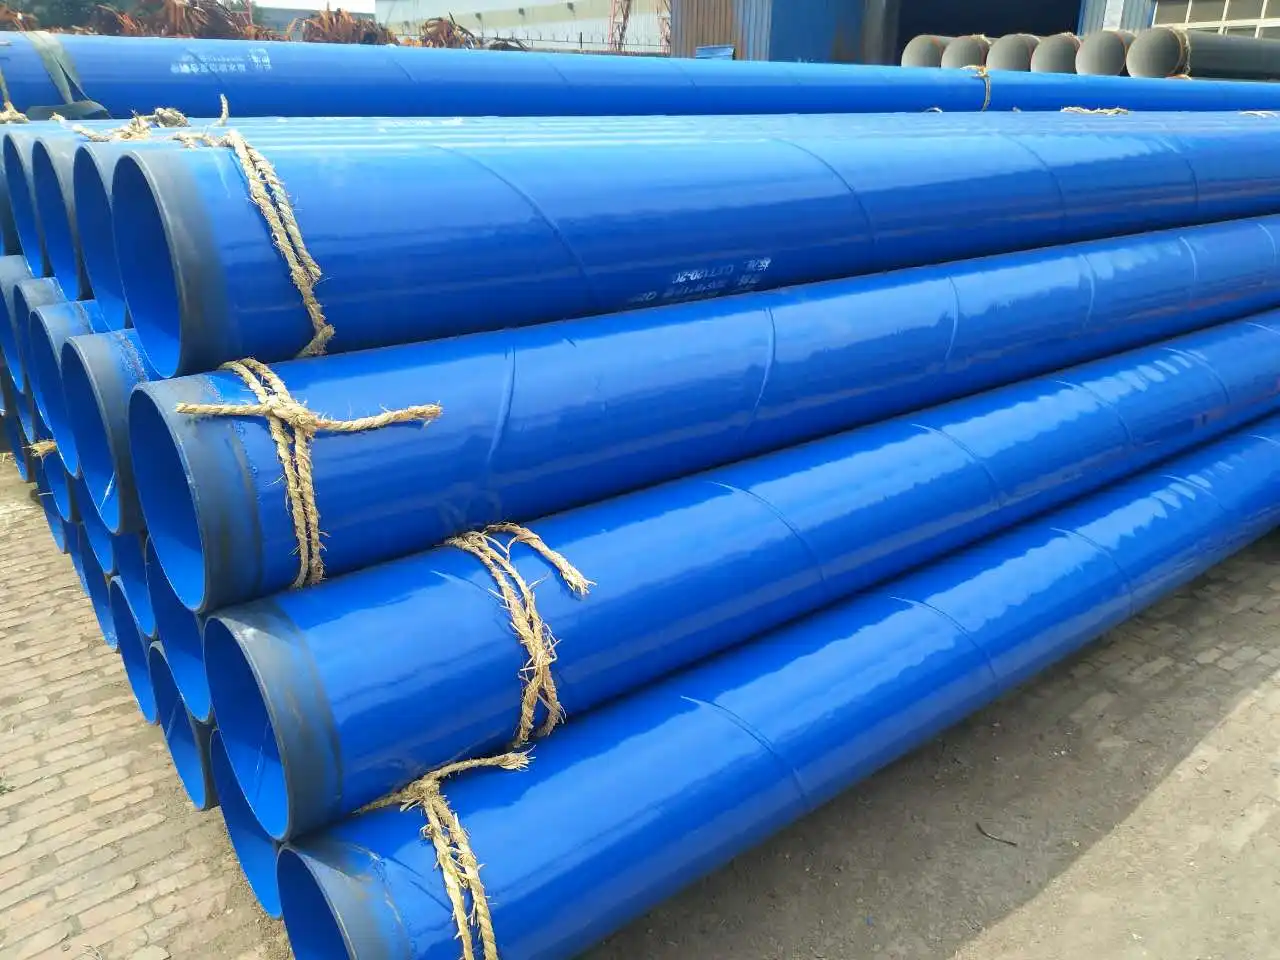 Characteristics of mining plastic-coated steel pipes